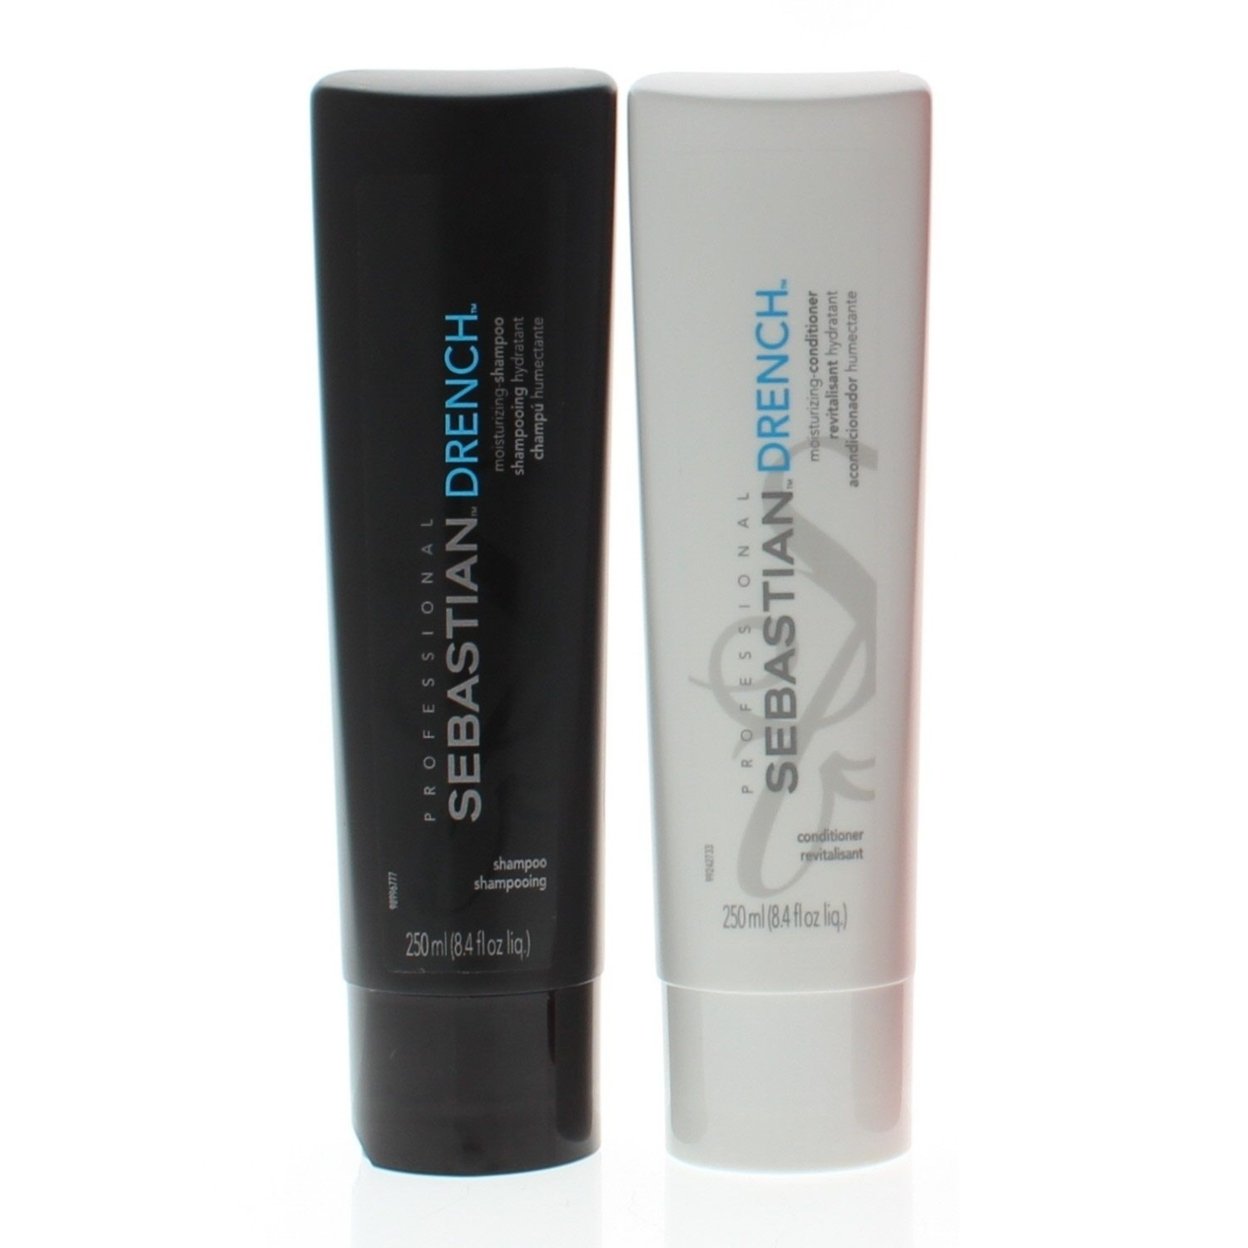 Sebastian Drench Shampoo And Conditioner 2 X 8.45oz Combo